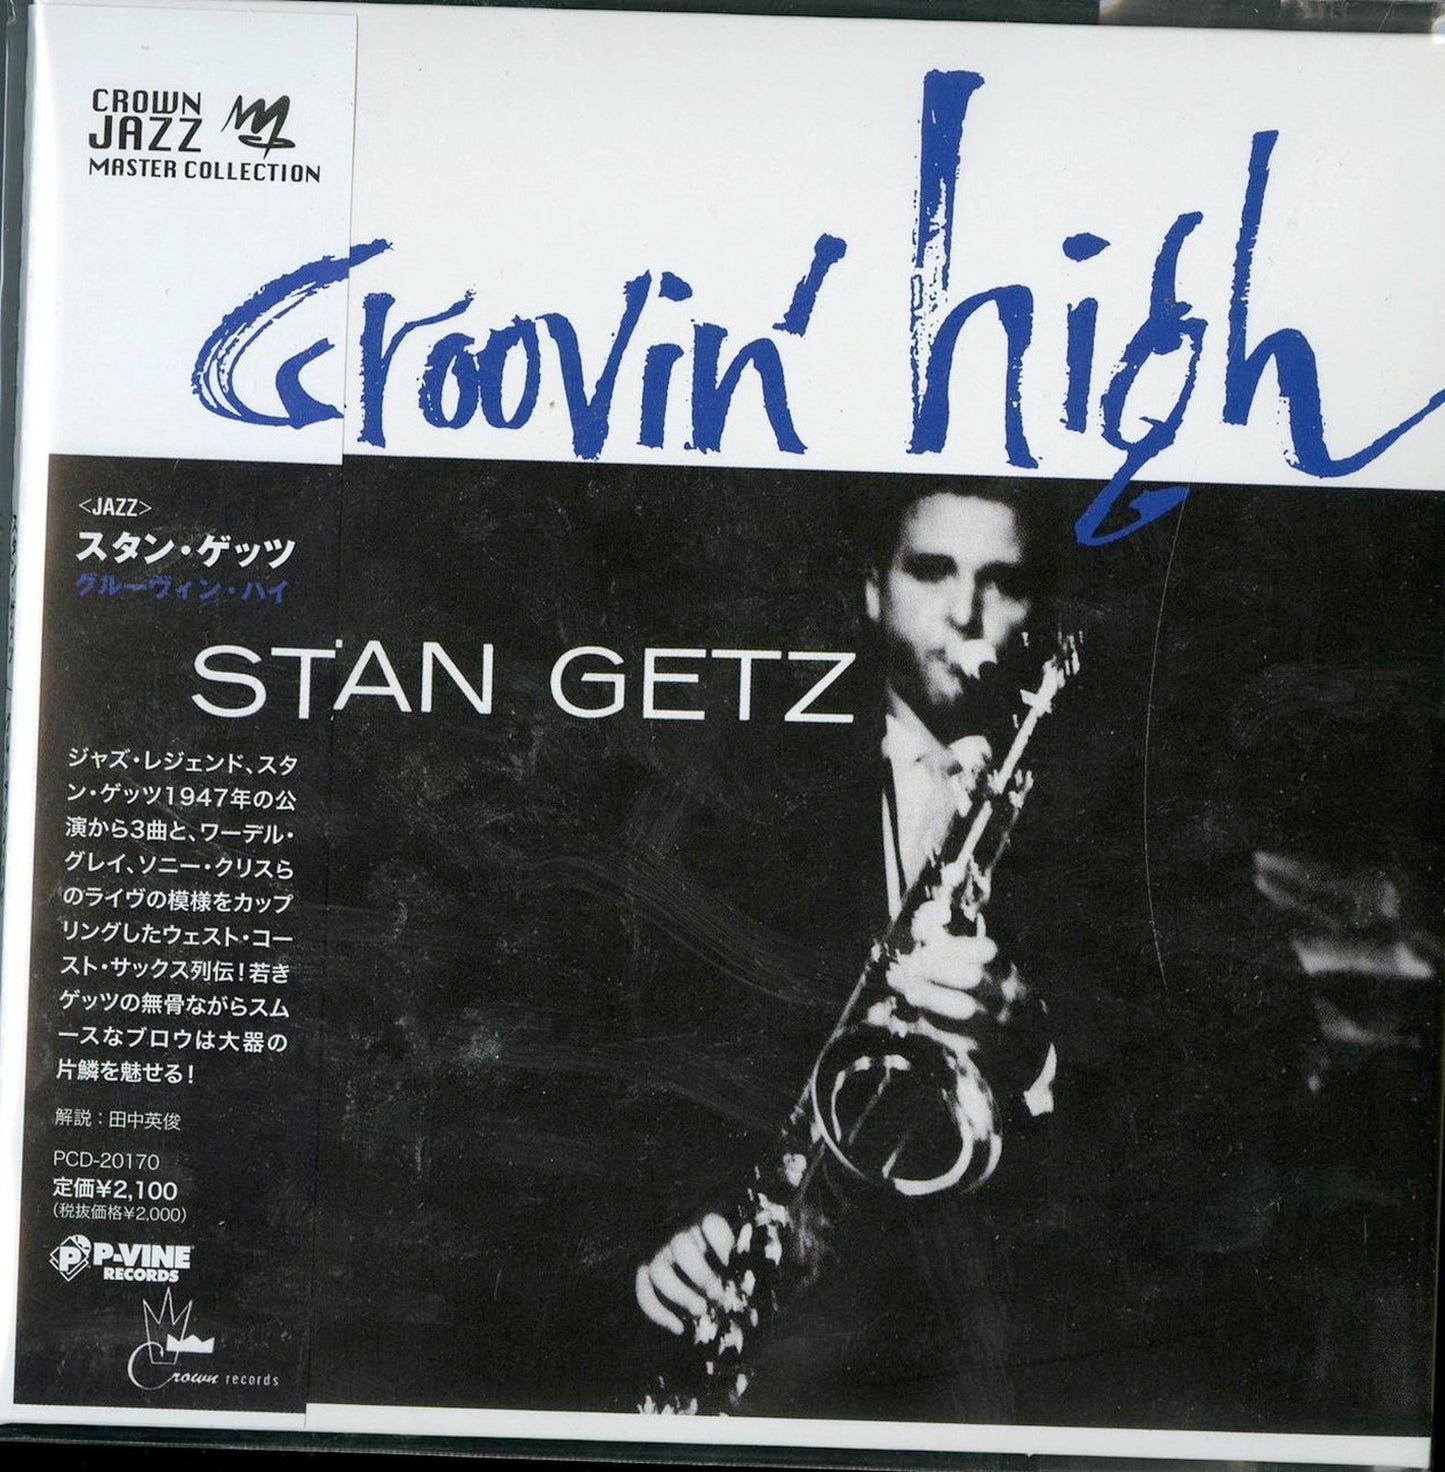 Stan Getz - Groovin' High - Mini LP CD Bonus Track Limited Edition